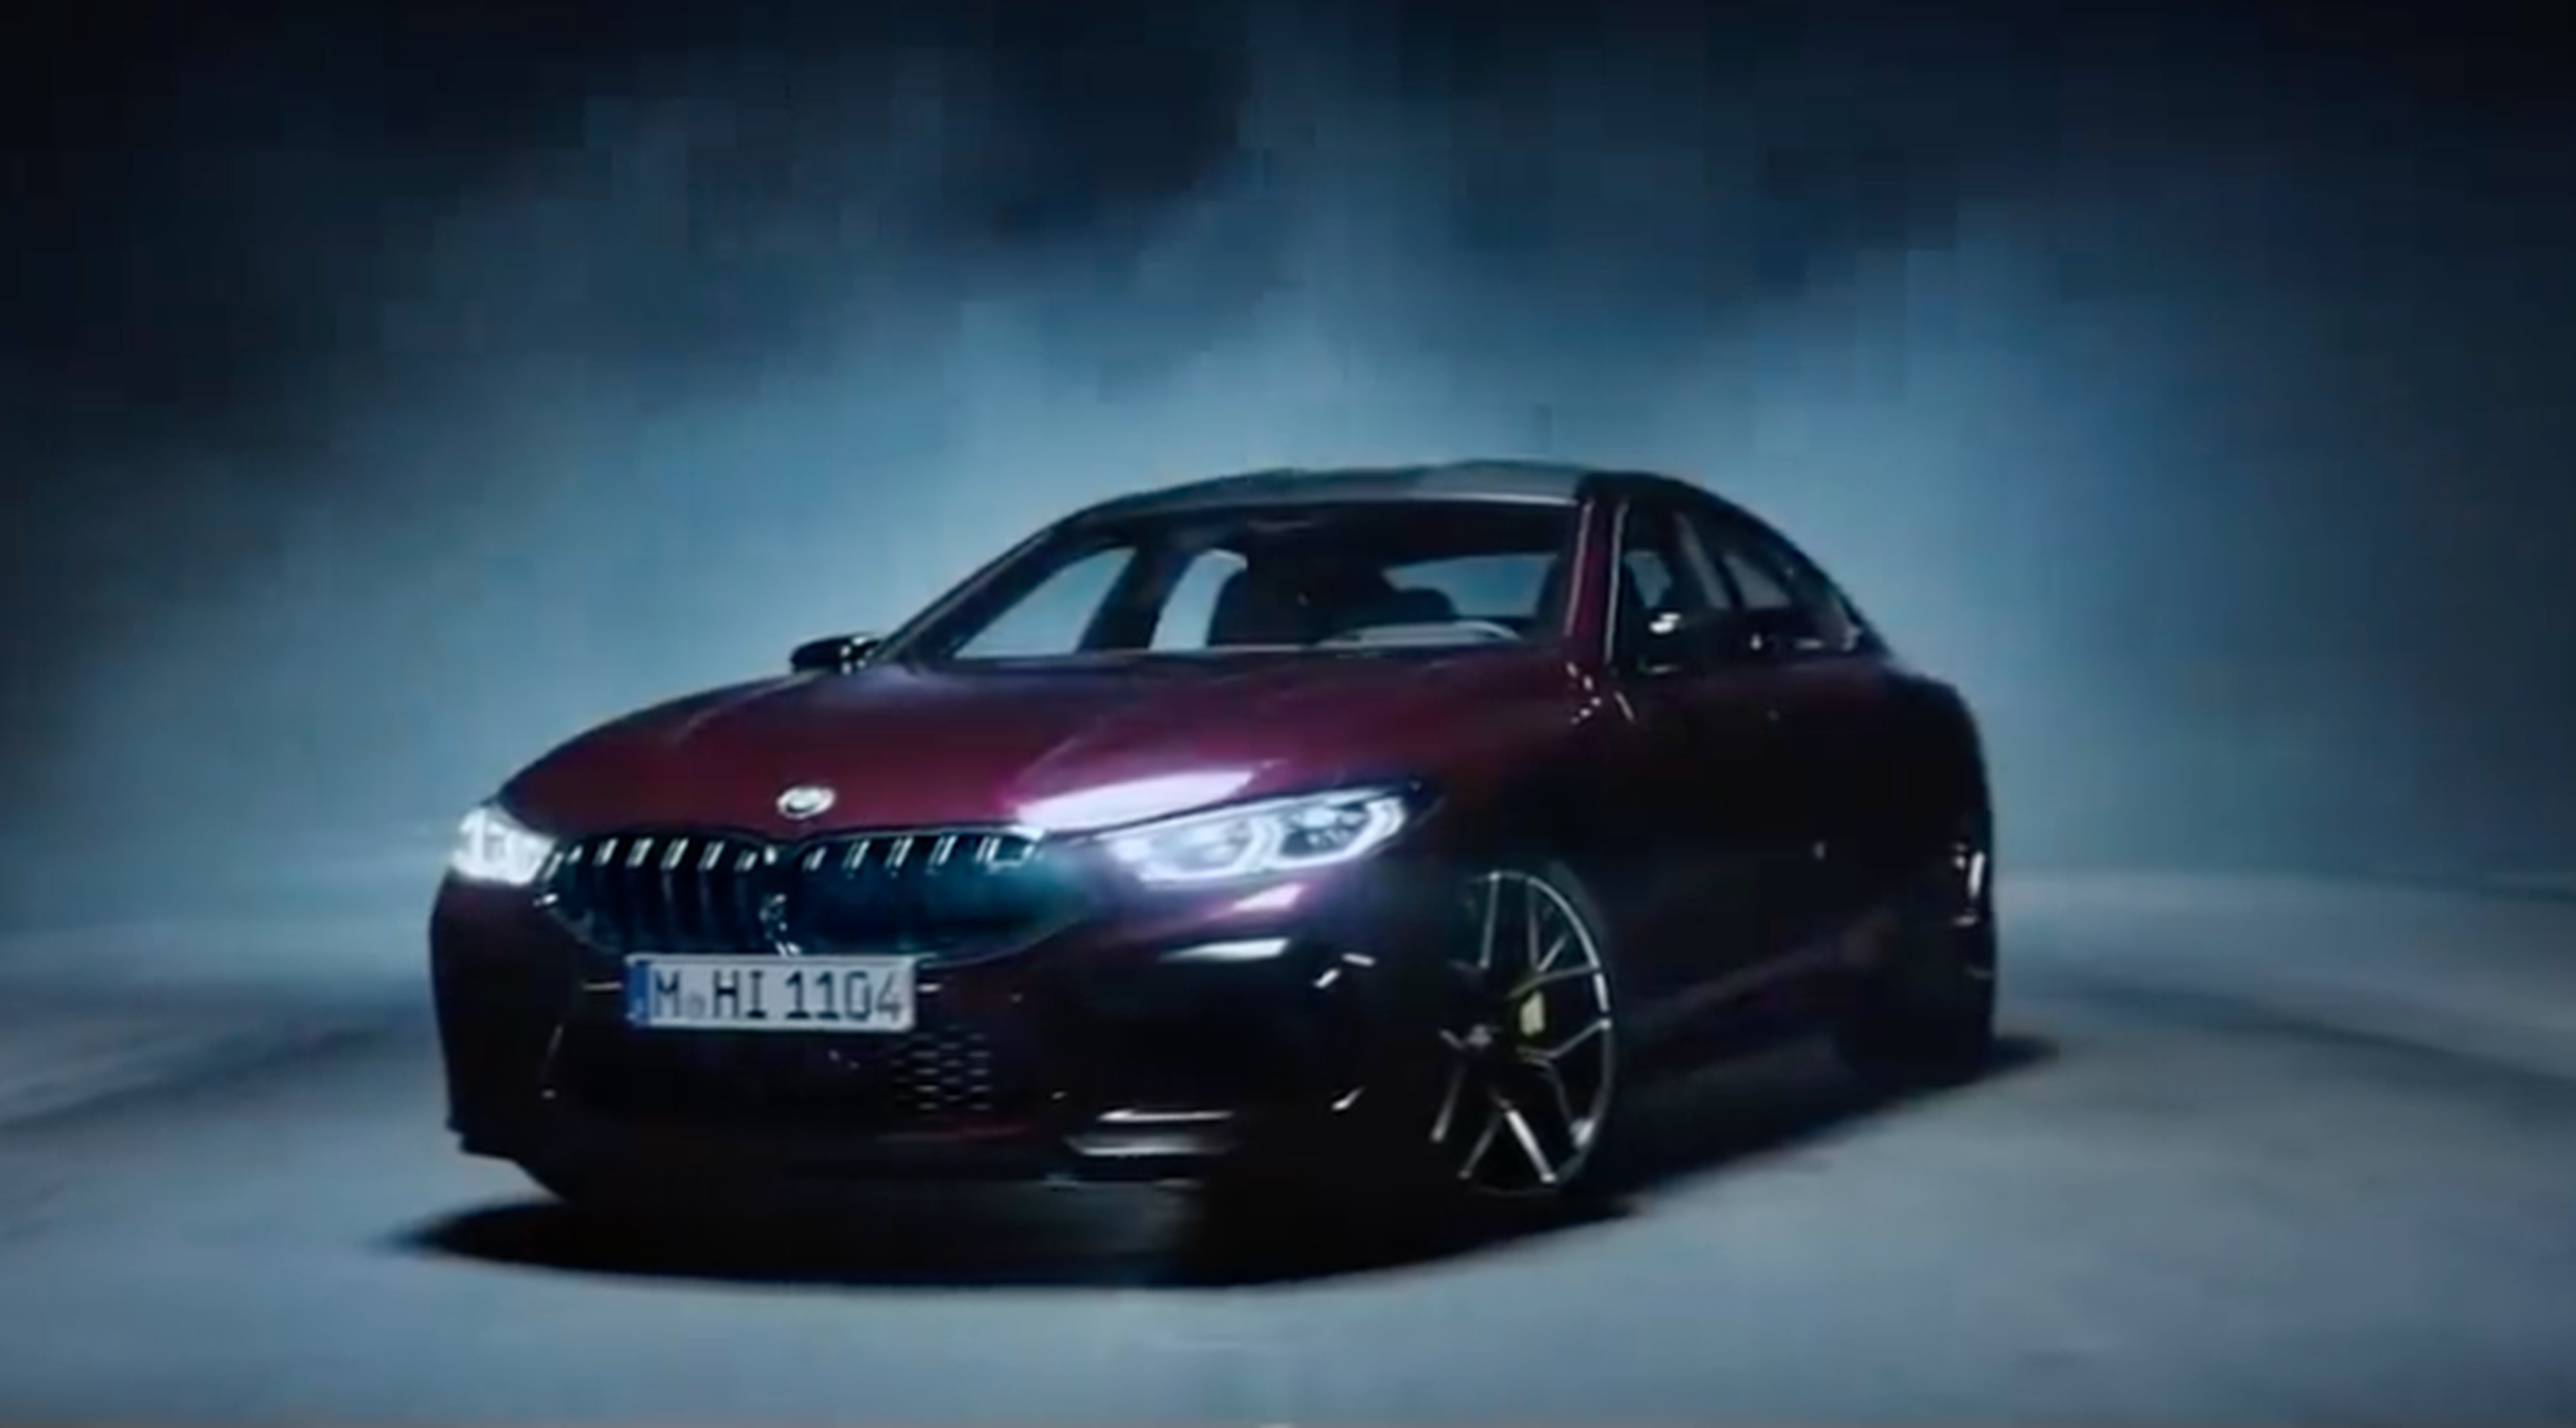 VÍDEO: BMW M8 Competition, así se nos presenta en este espectacular vídeo